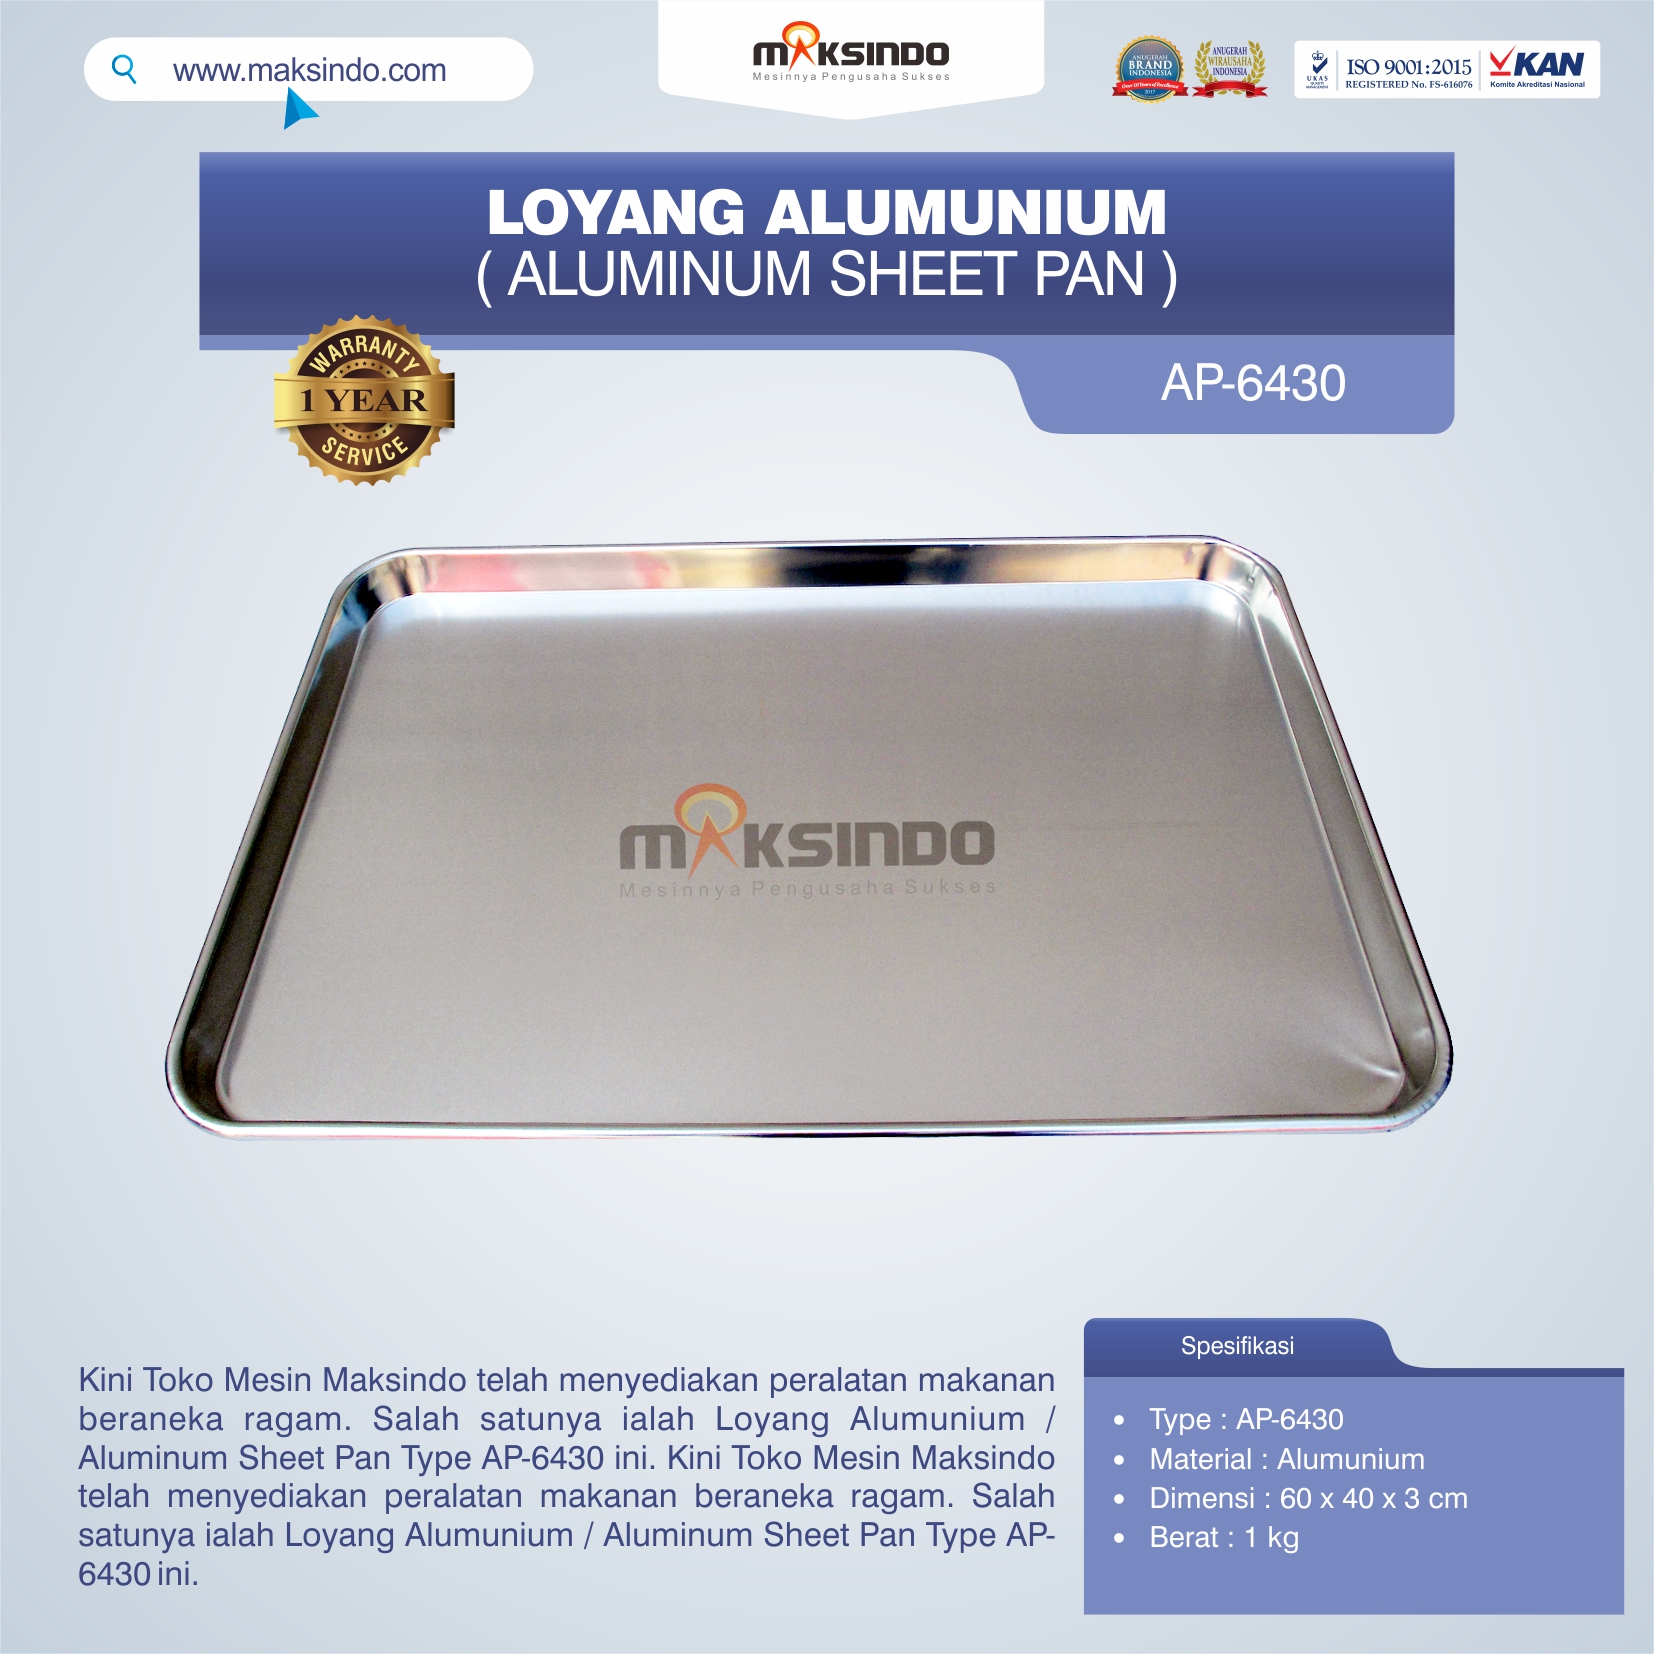 Jual Loyang Alumunium / Aluminum Sheet Pan Type AP-6430 di Bogor